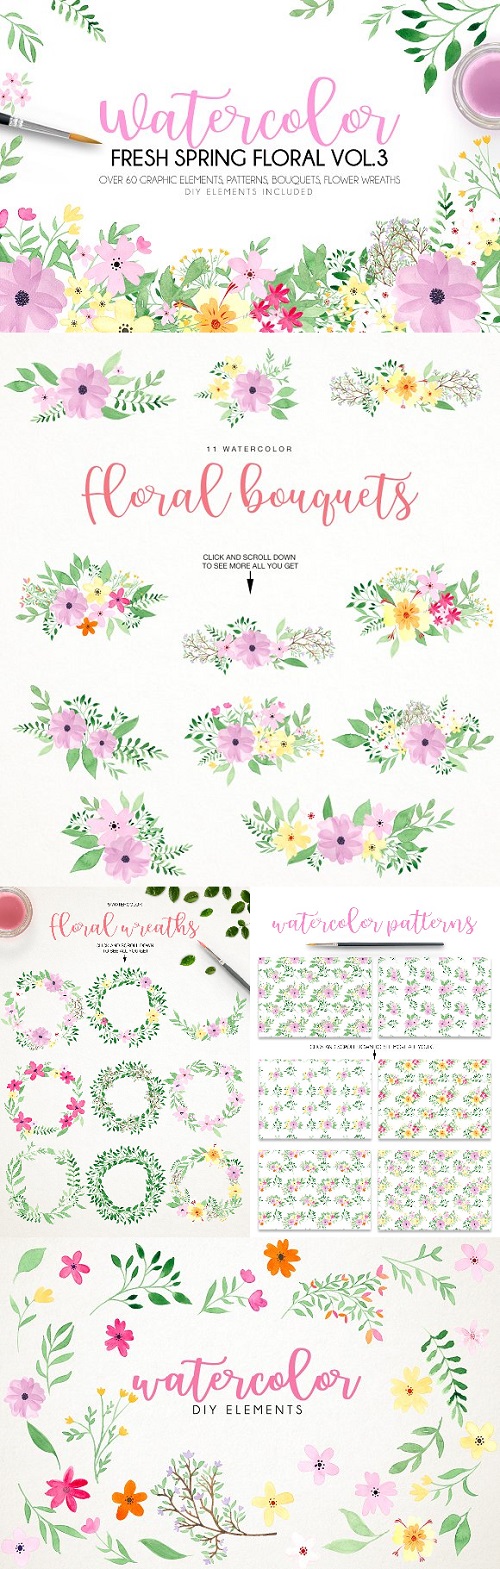 Watercolor fresh spring floral vol.3 - 1476803